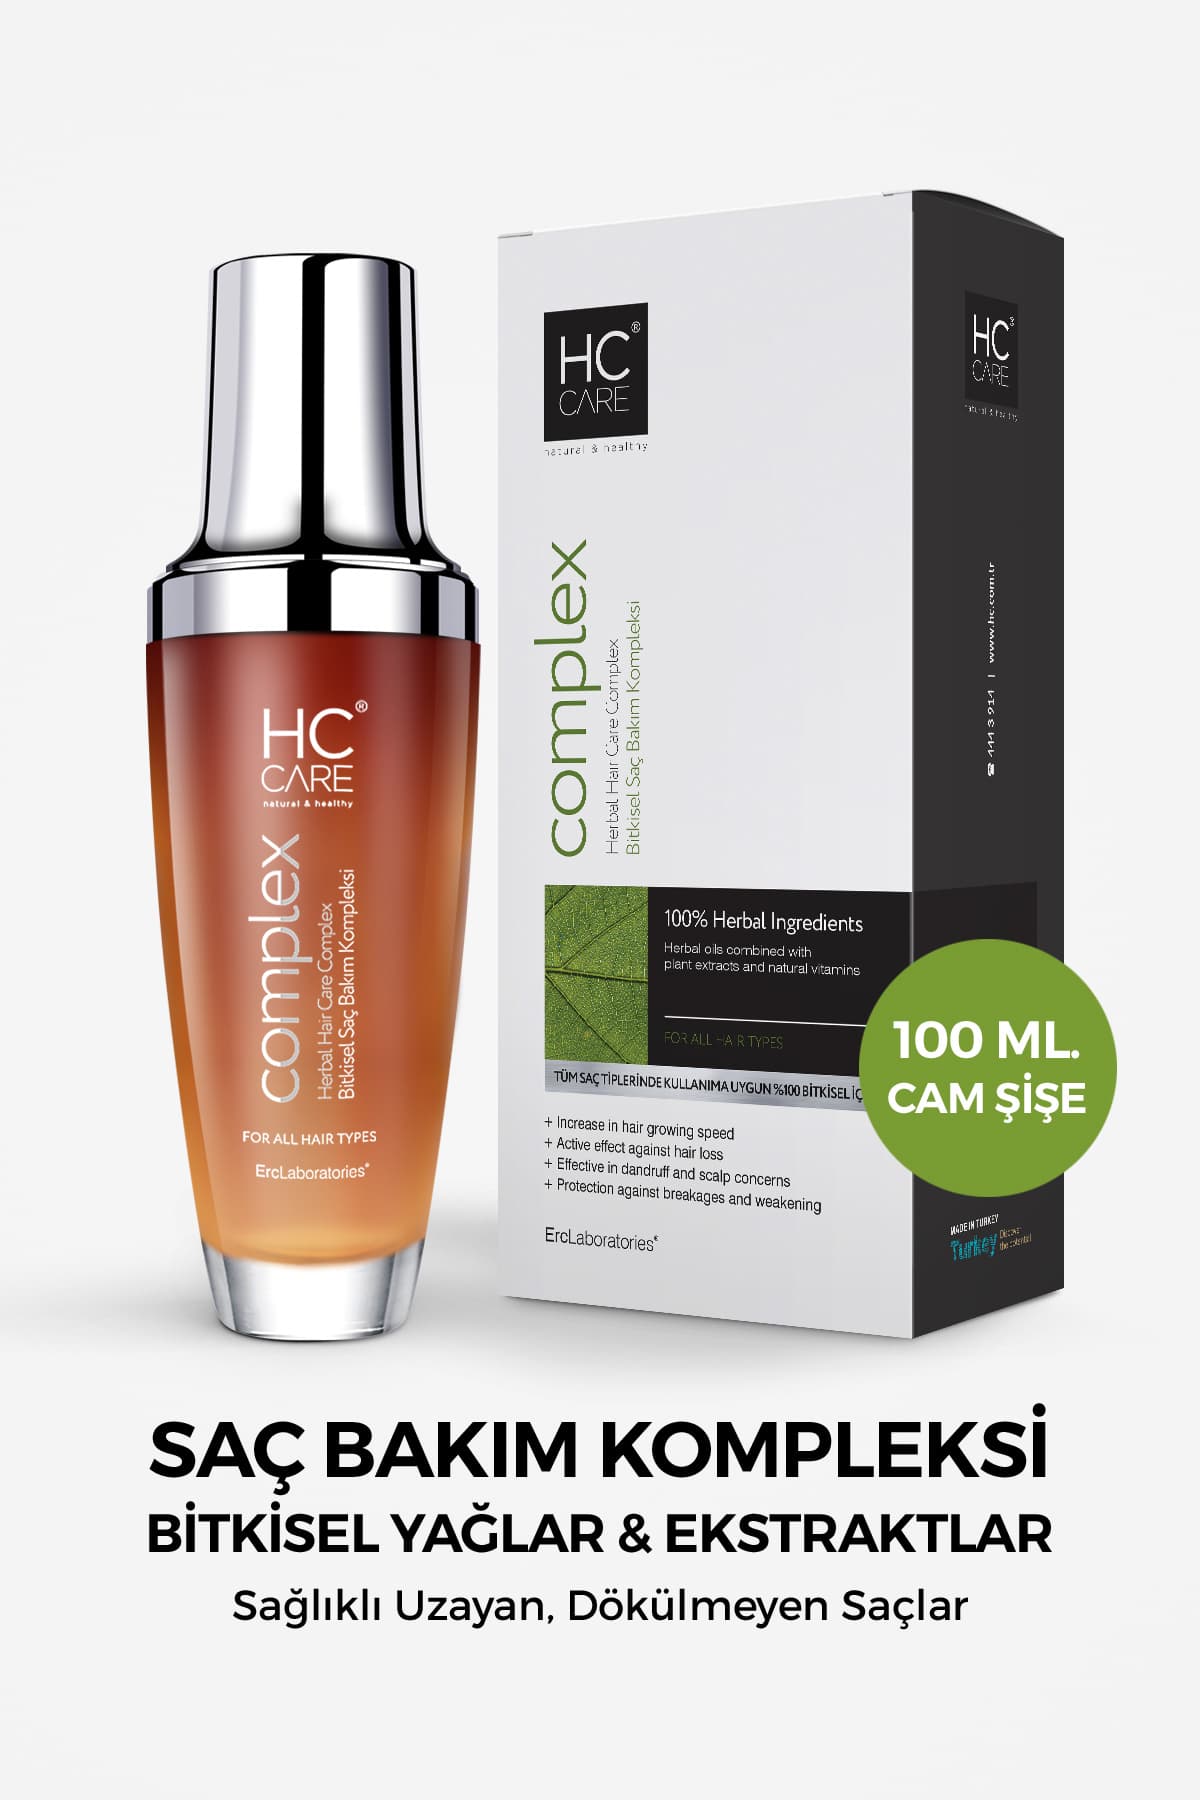 HC Care Complex Bitkisel Saç Bakım Kompleksi - 100 ml